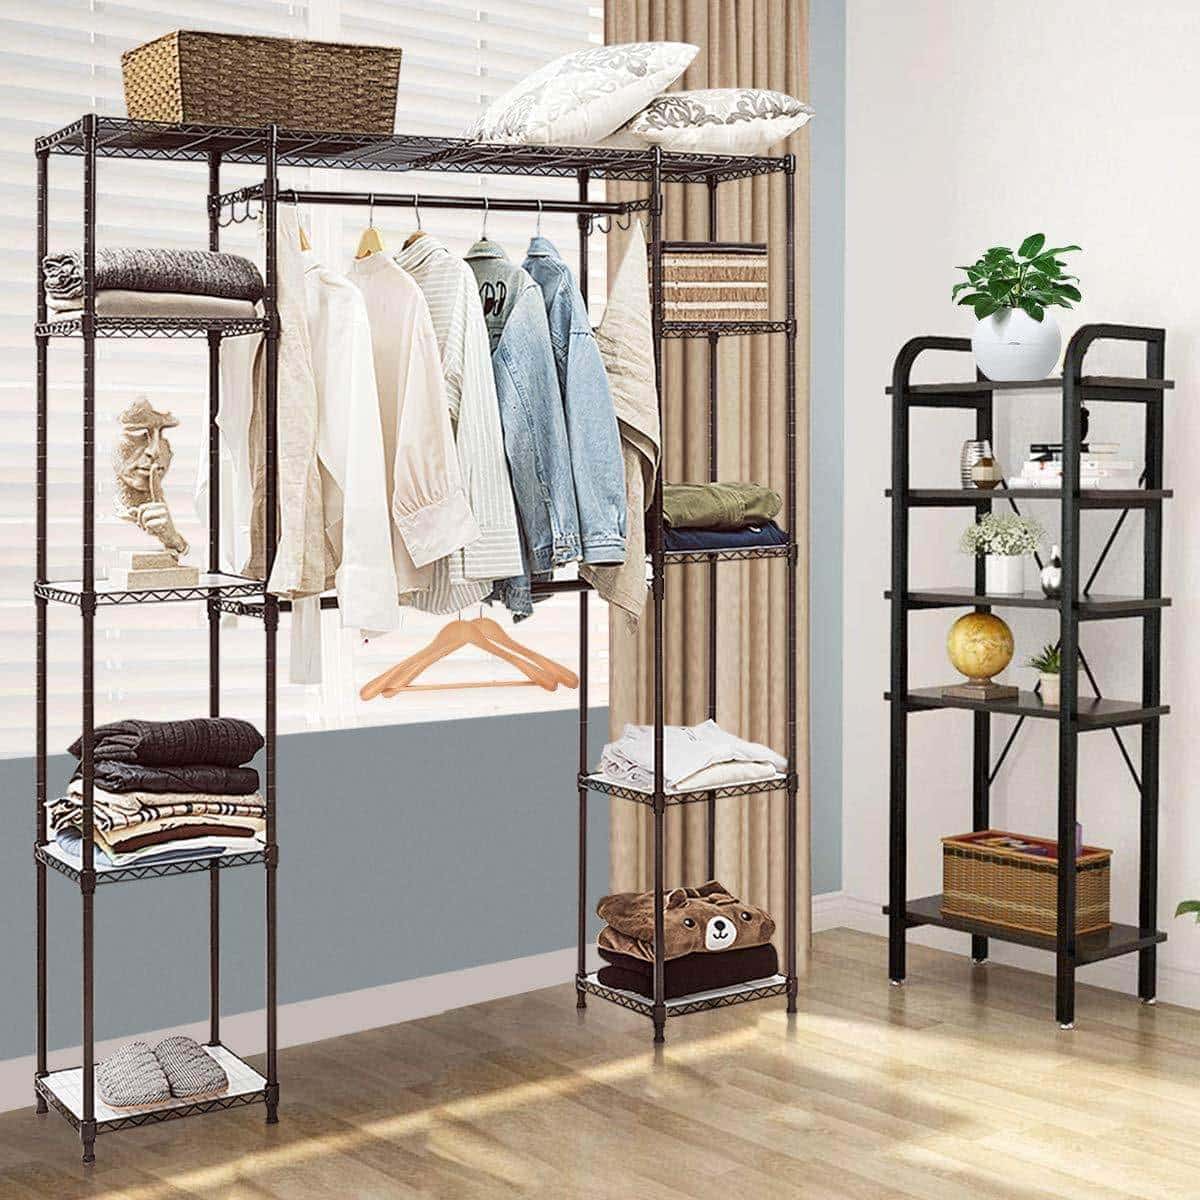 Order now tangkula garment rack portable adjustable expandable closet storage organizer system home bedroom closet shelves clothes wardrobe coffee